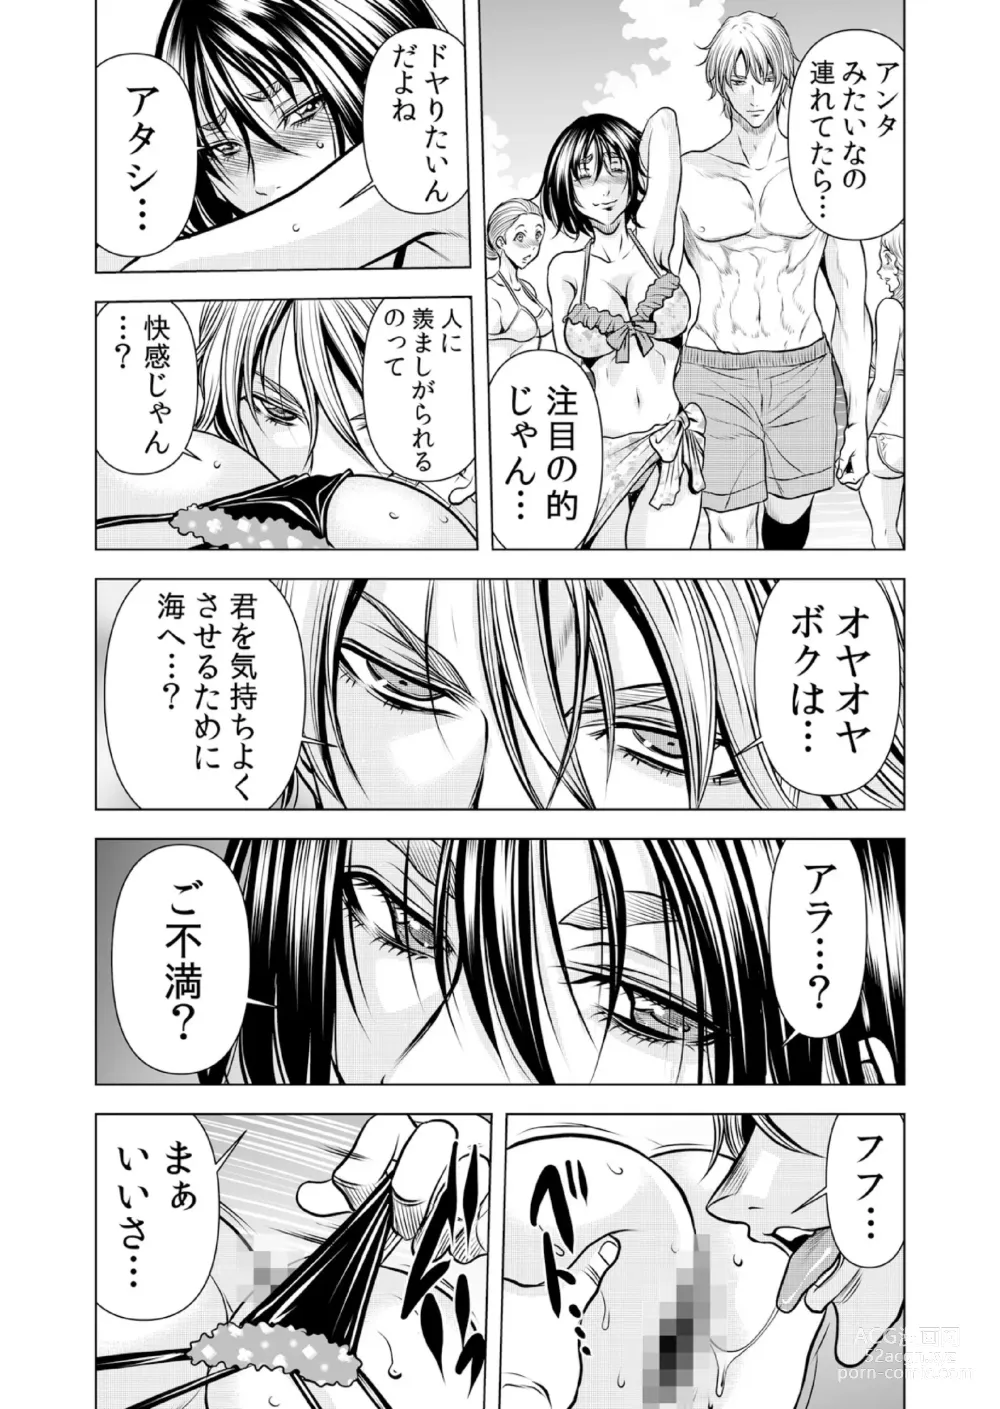 Page 7 of manga Mamasan,yobai ha OK desuka? VOL11